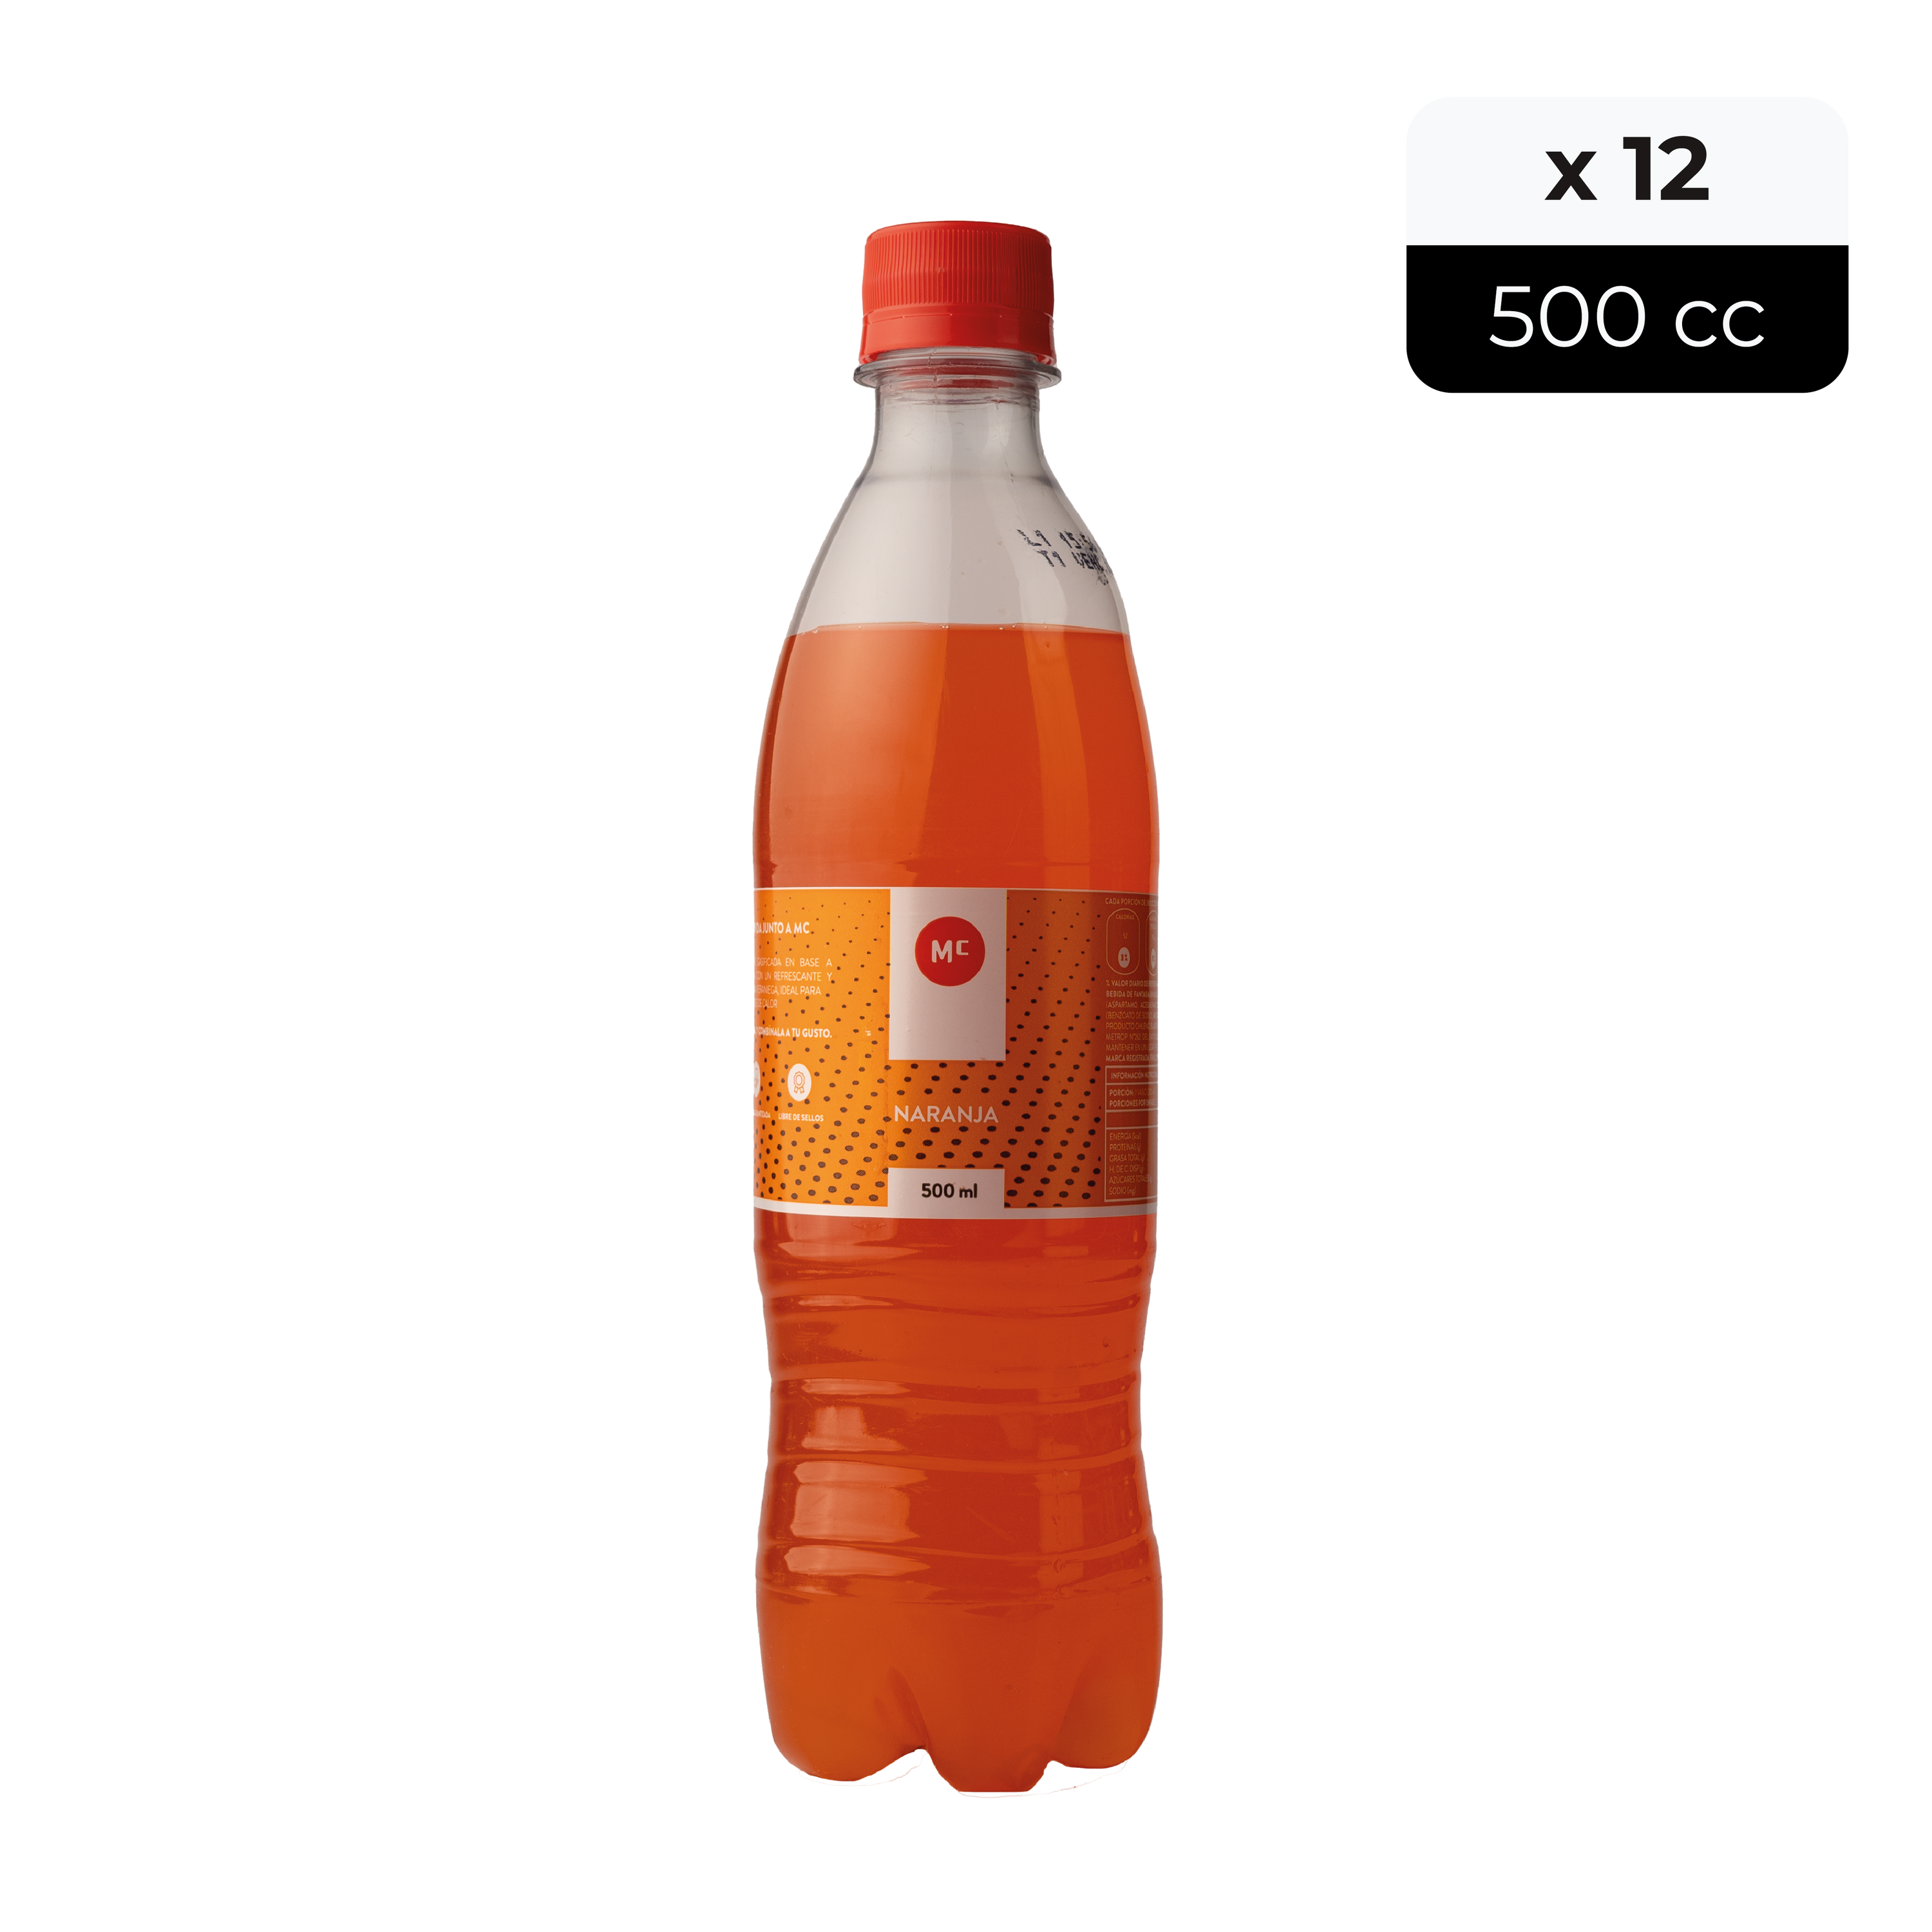 Bebida Mc Naranja 500 cc